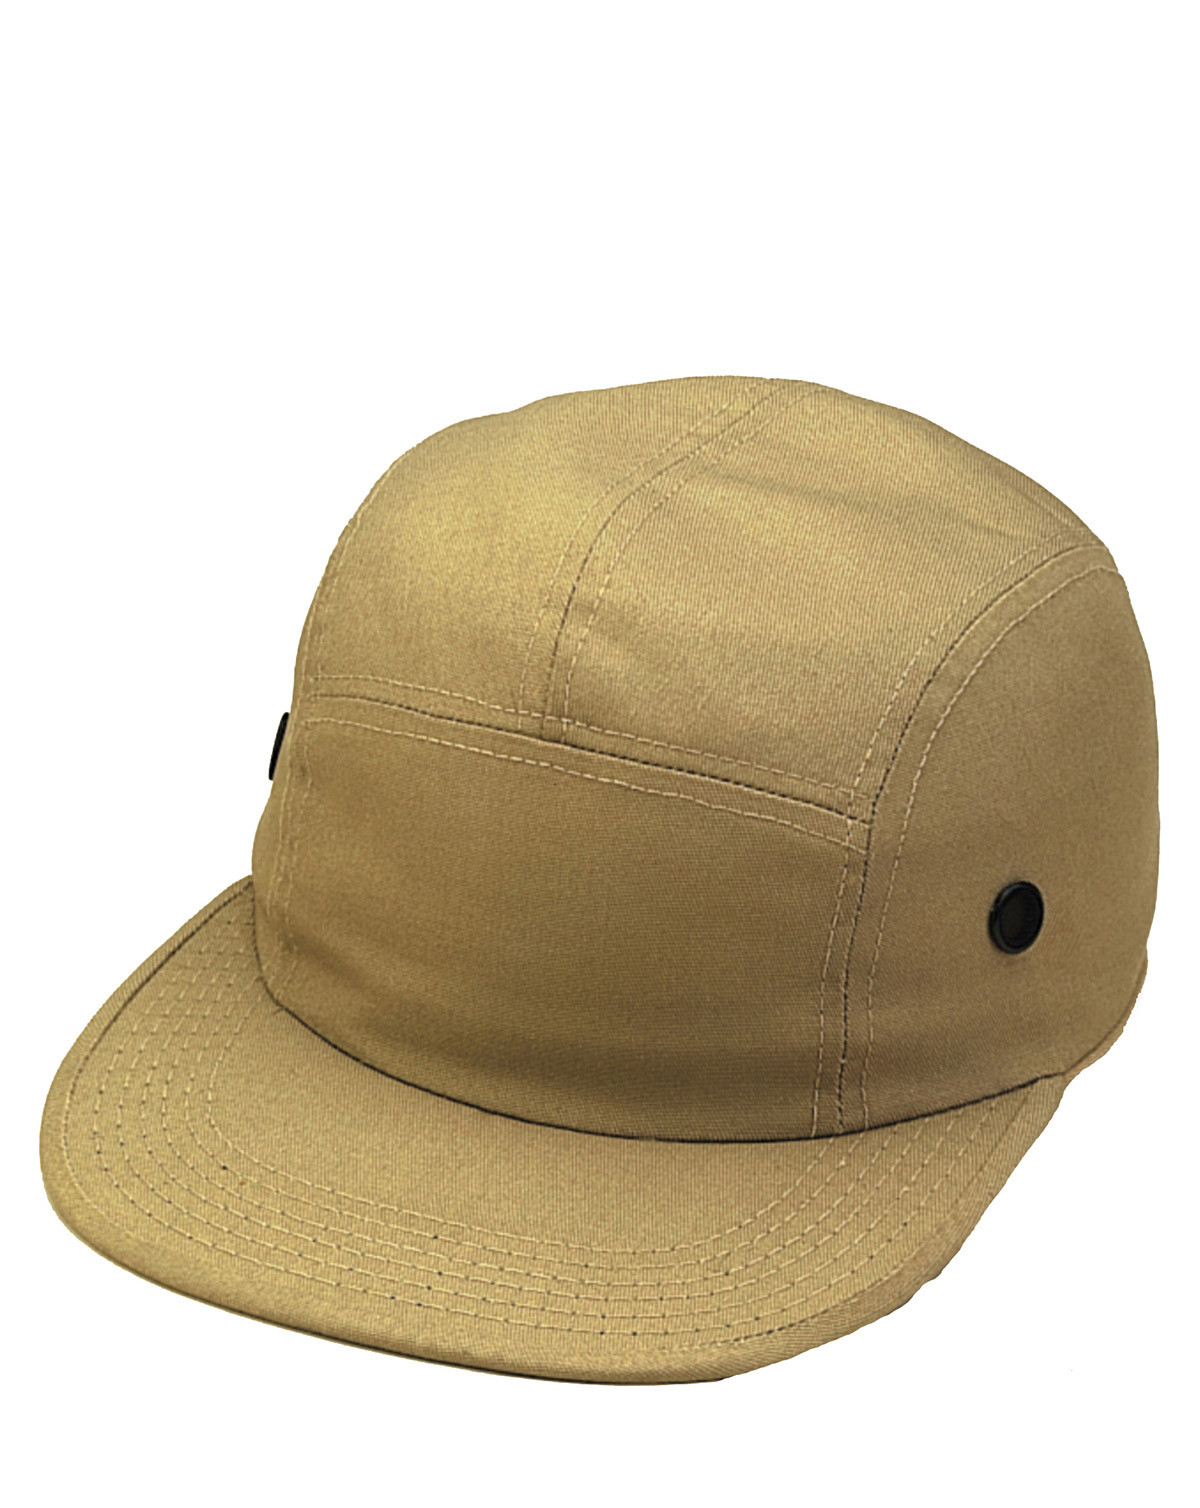 Rothco 5 Panel Military Street Cap (Khaki, One Size)